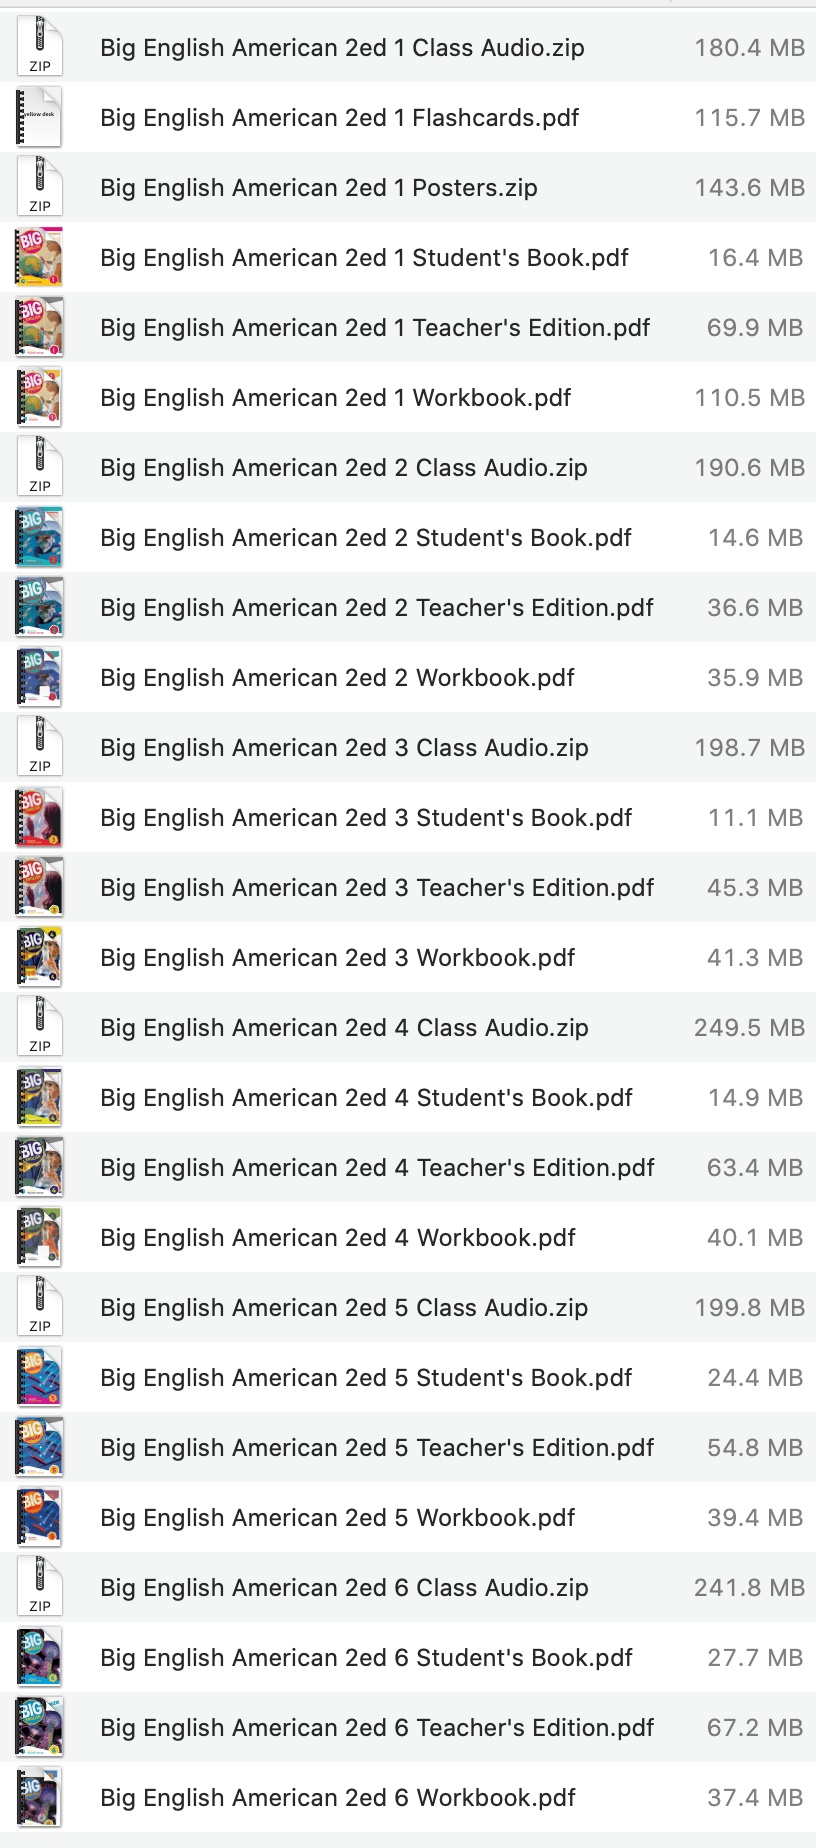 Big English American 2ed list